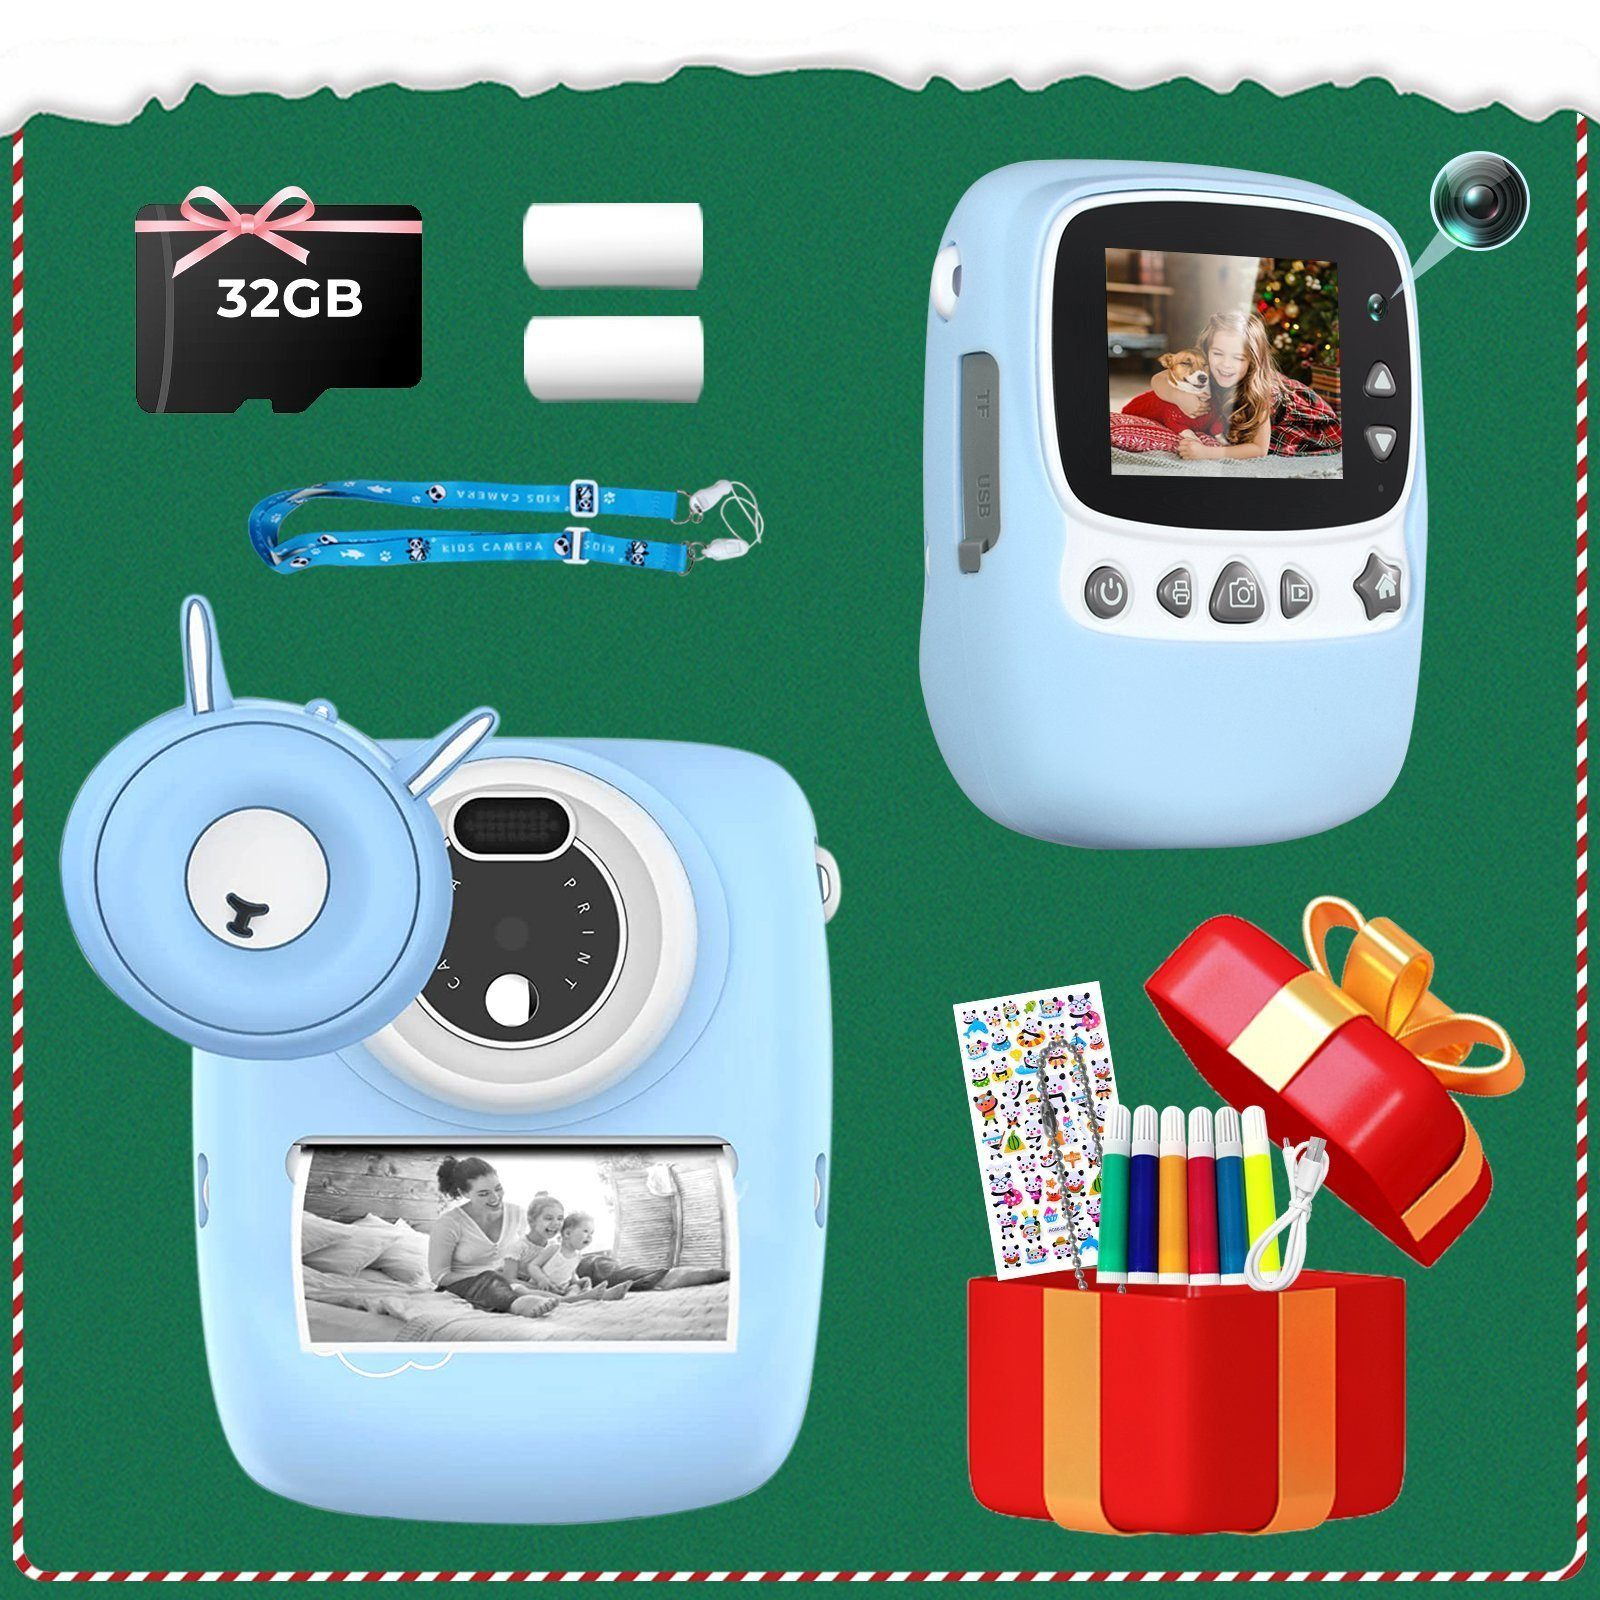 LINGDA Kreative Kinderkamera Sofortbildkamera (6 farbigen Pinselstiften Aufkleber) blau, Druckpapier Rollen + LCD + Digital Kamera 2